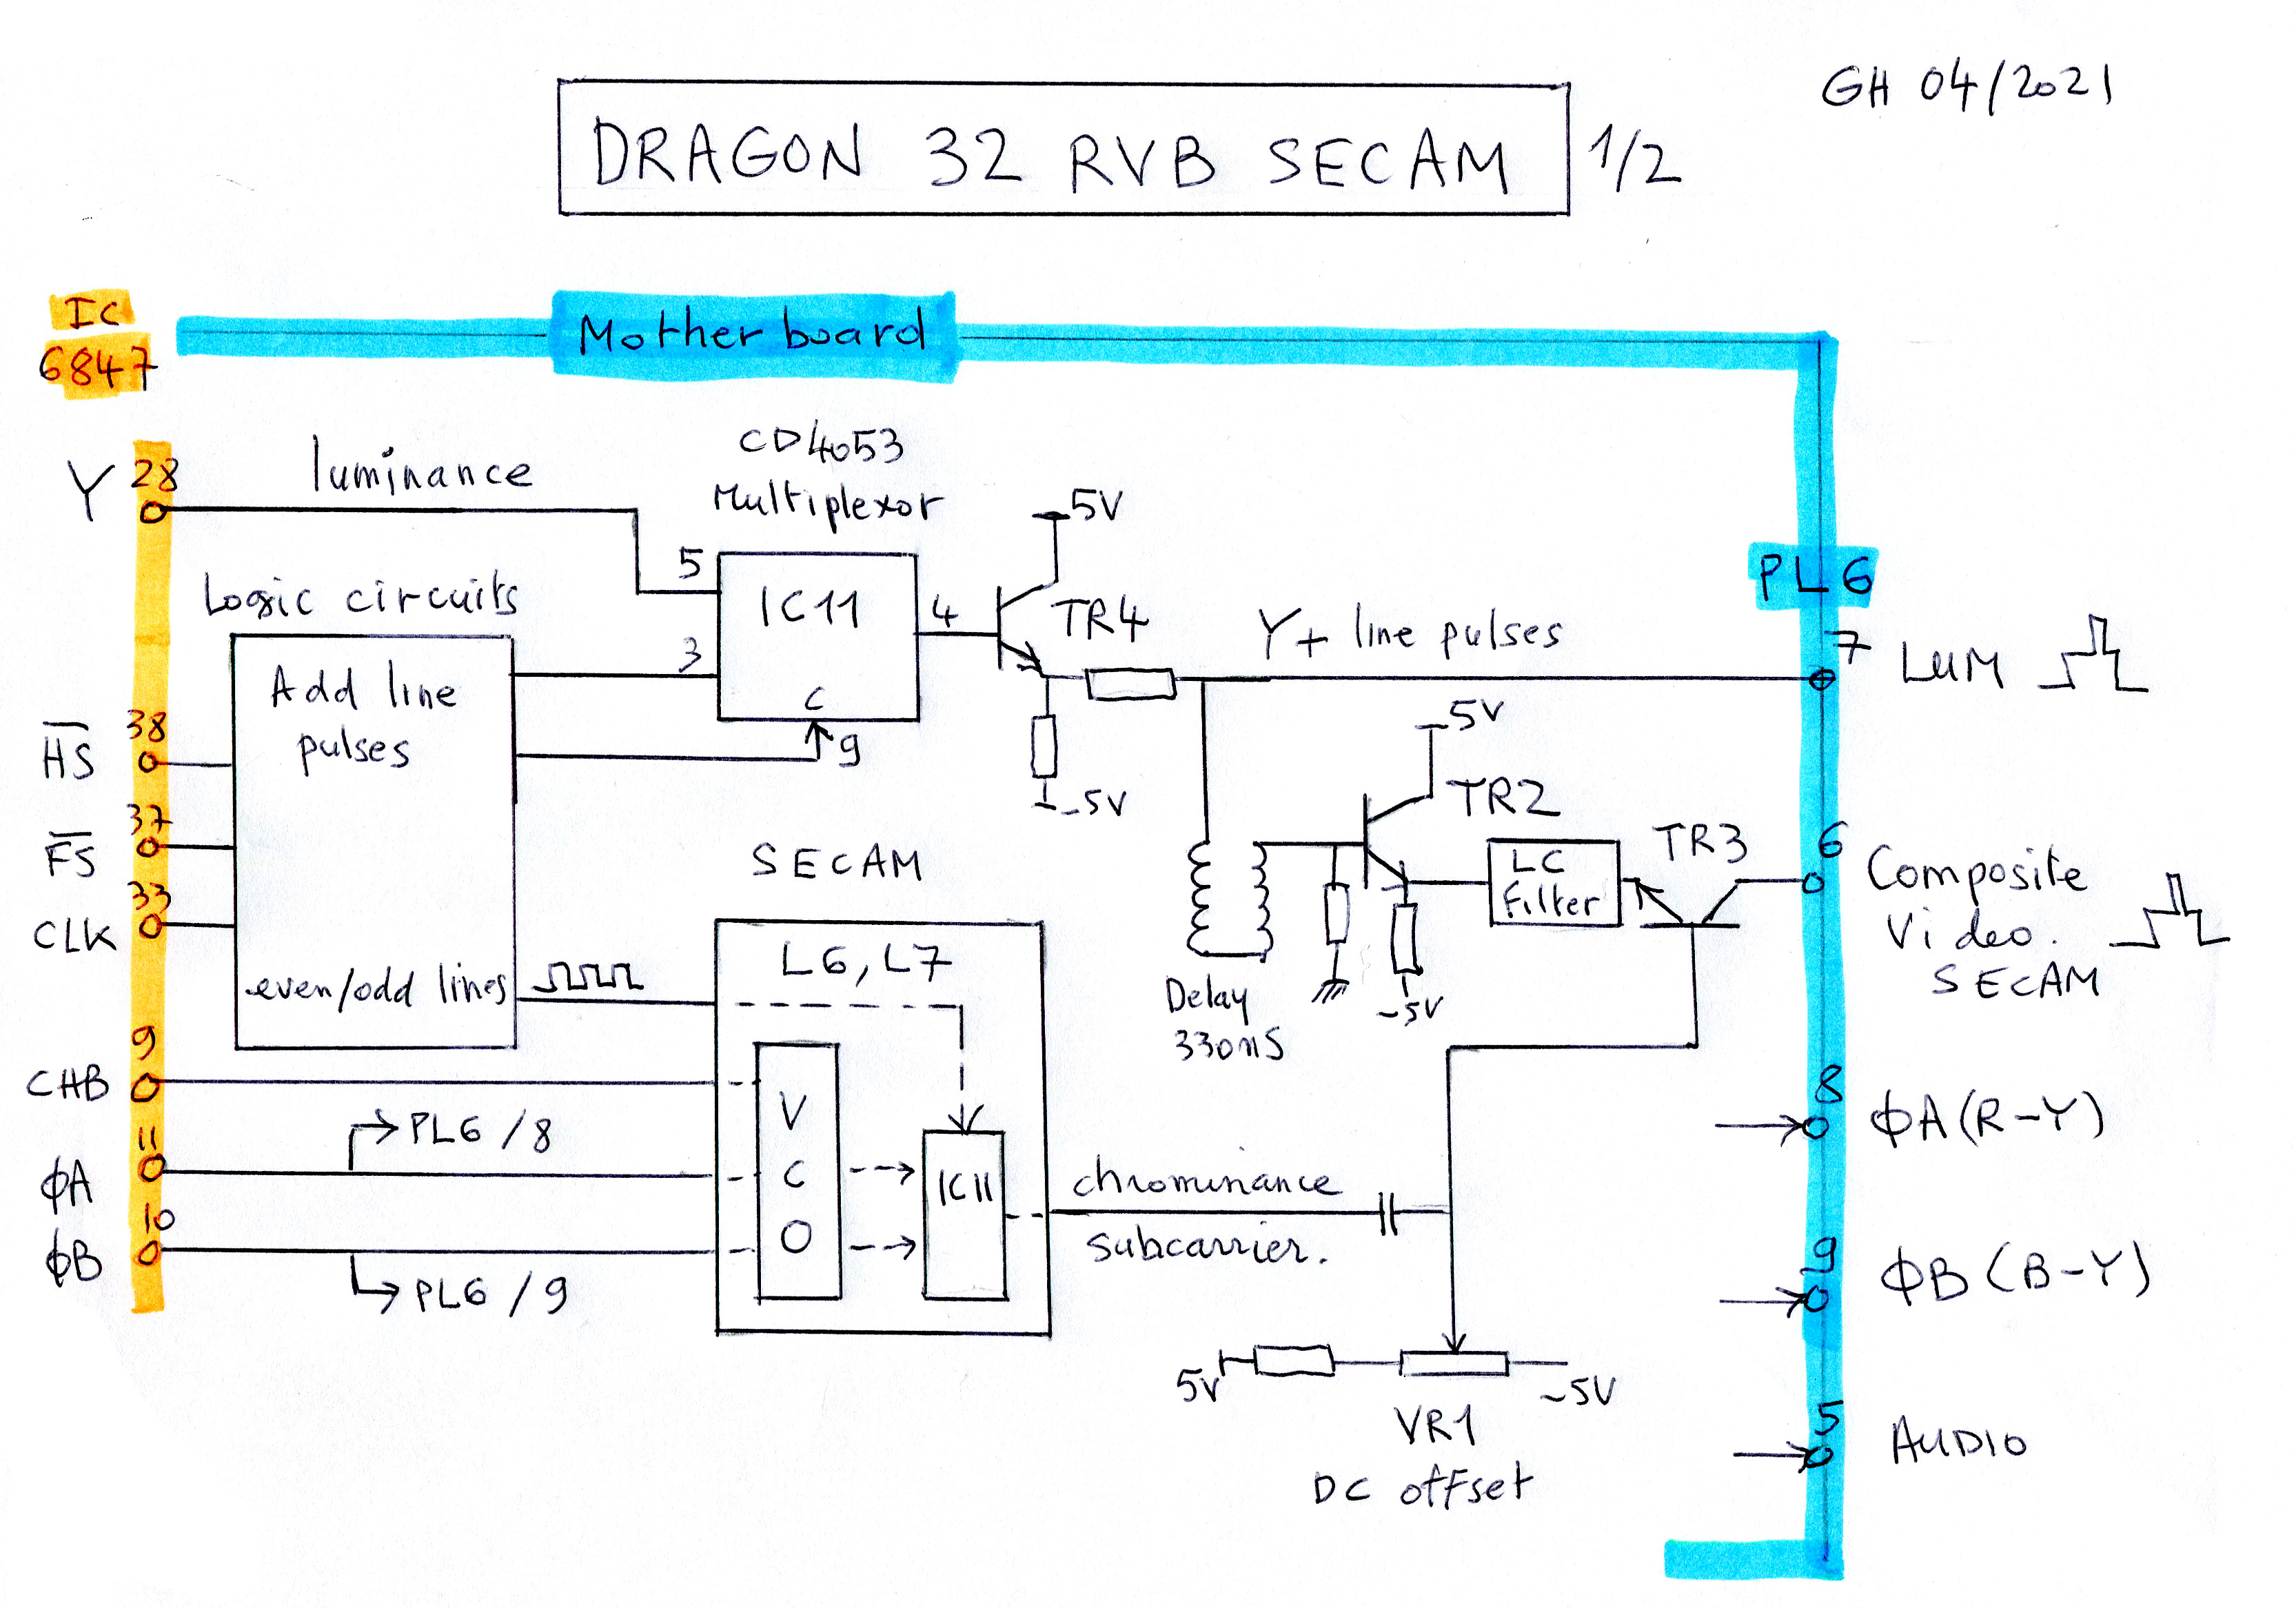 Dragon SECAM video on motherboard